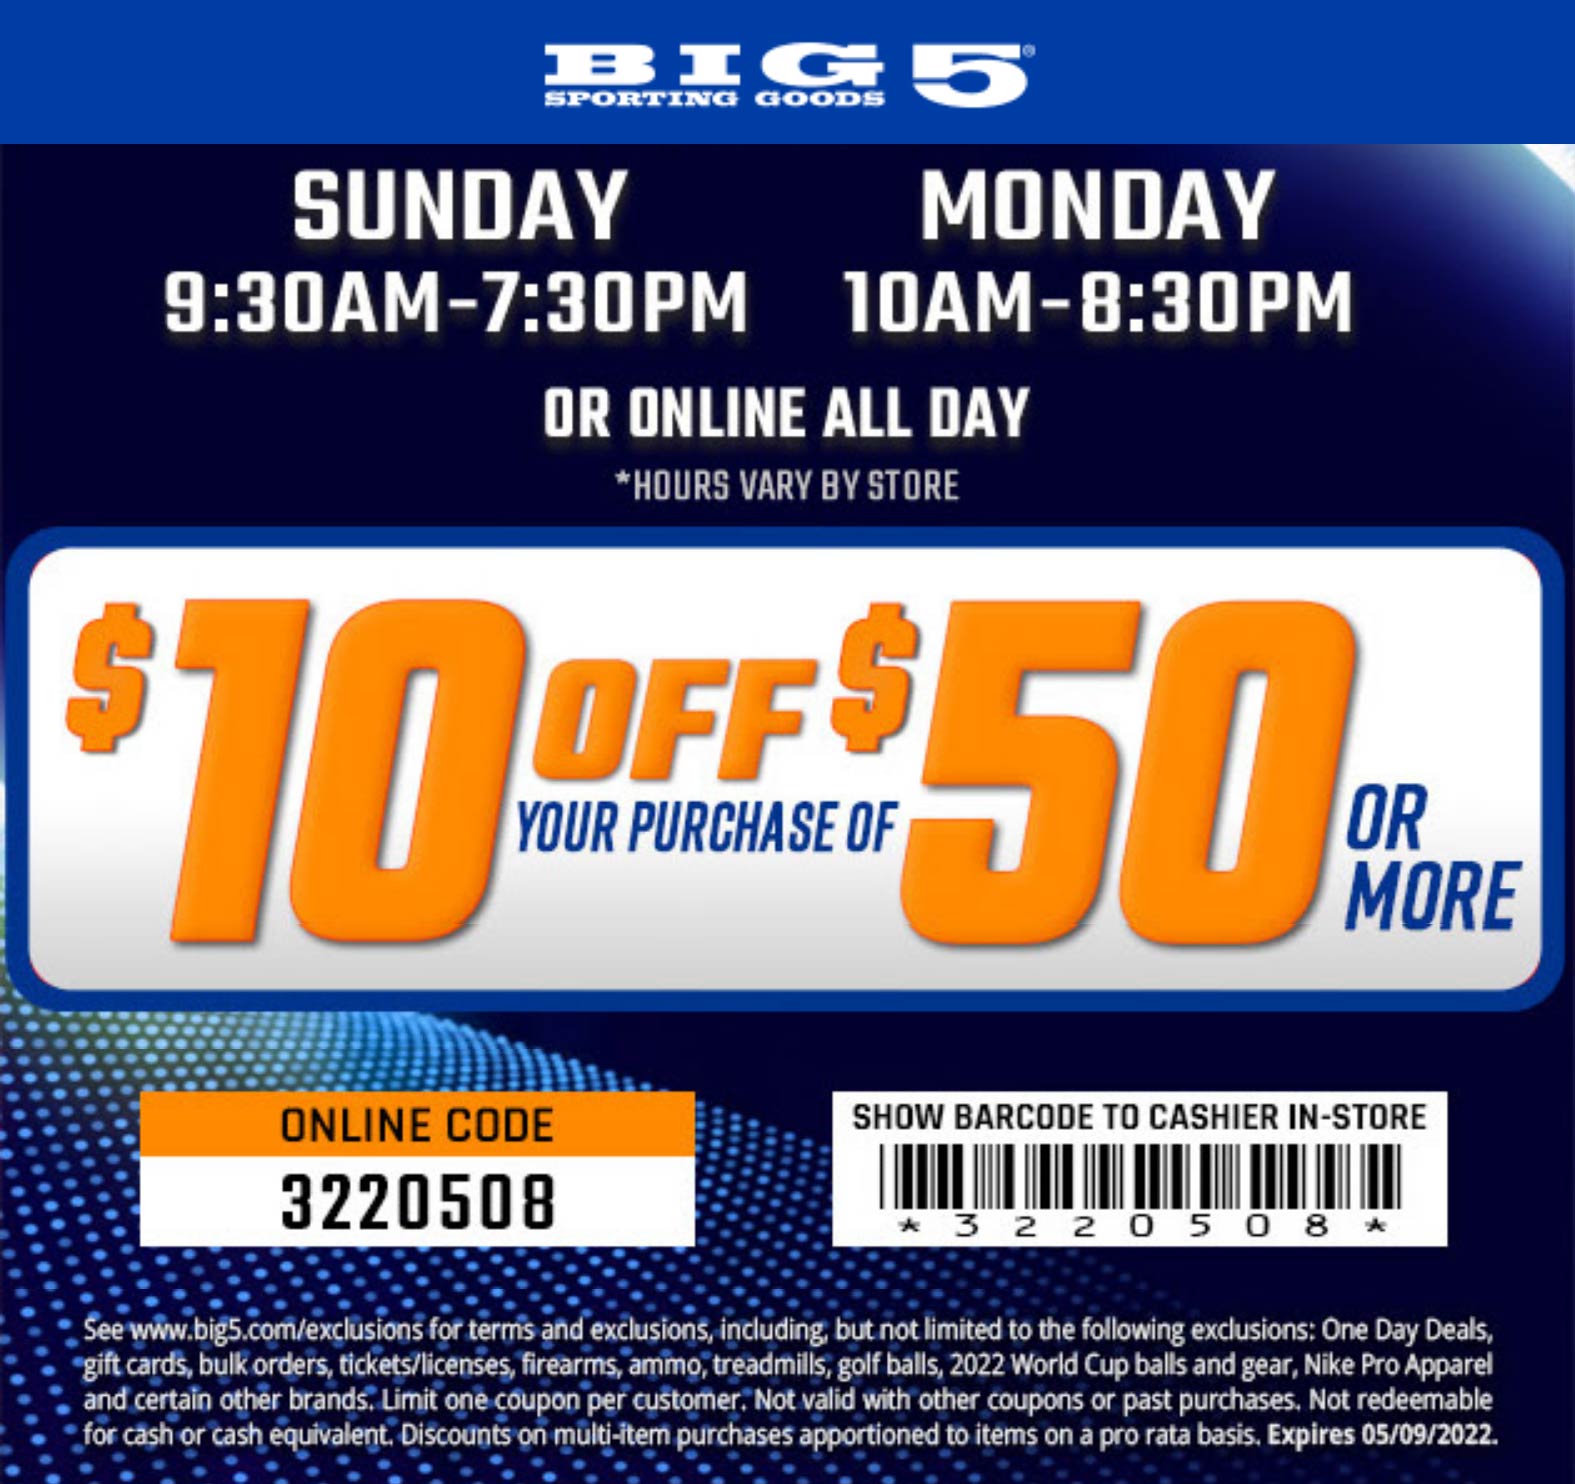 Big 5 stores Coupon  $10 off $50 at Big 5 sporting goods, or online via promo code 3220508 #big5 